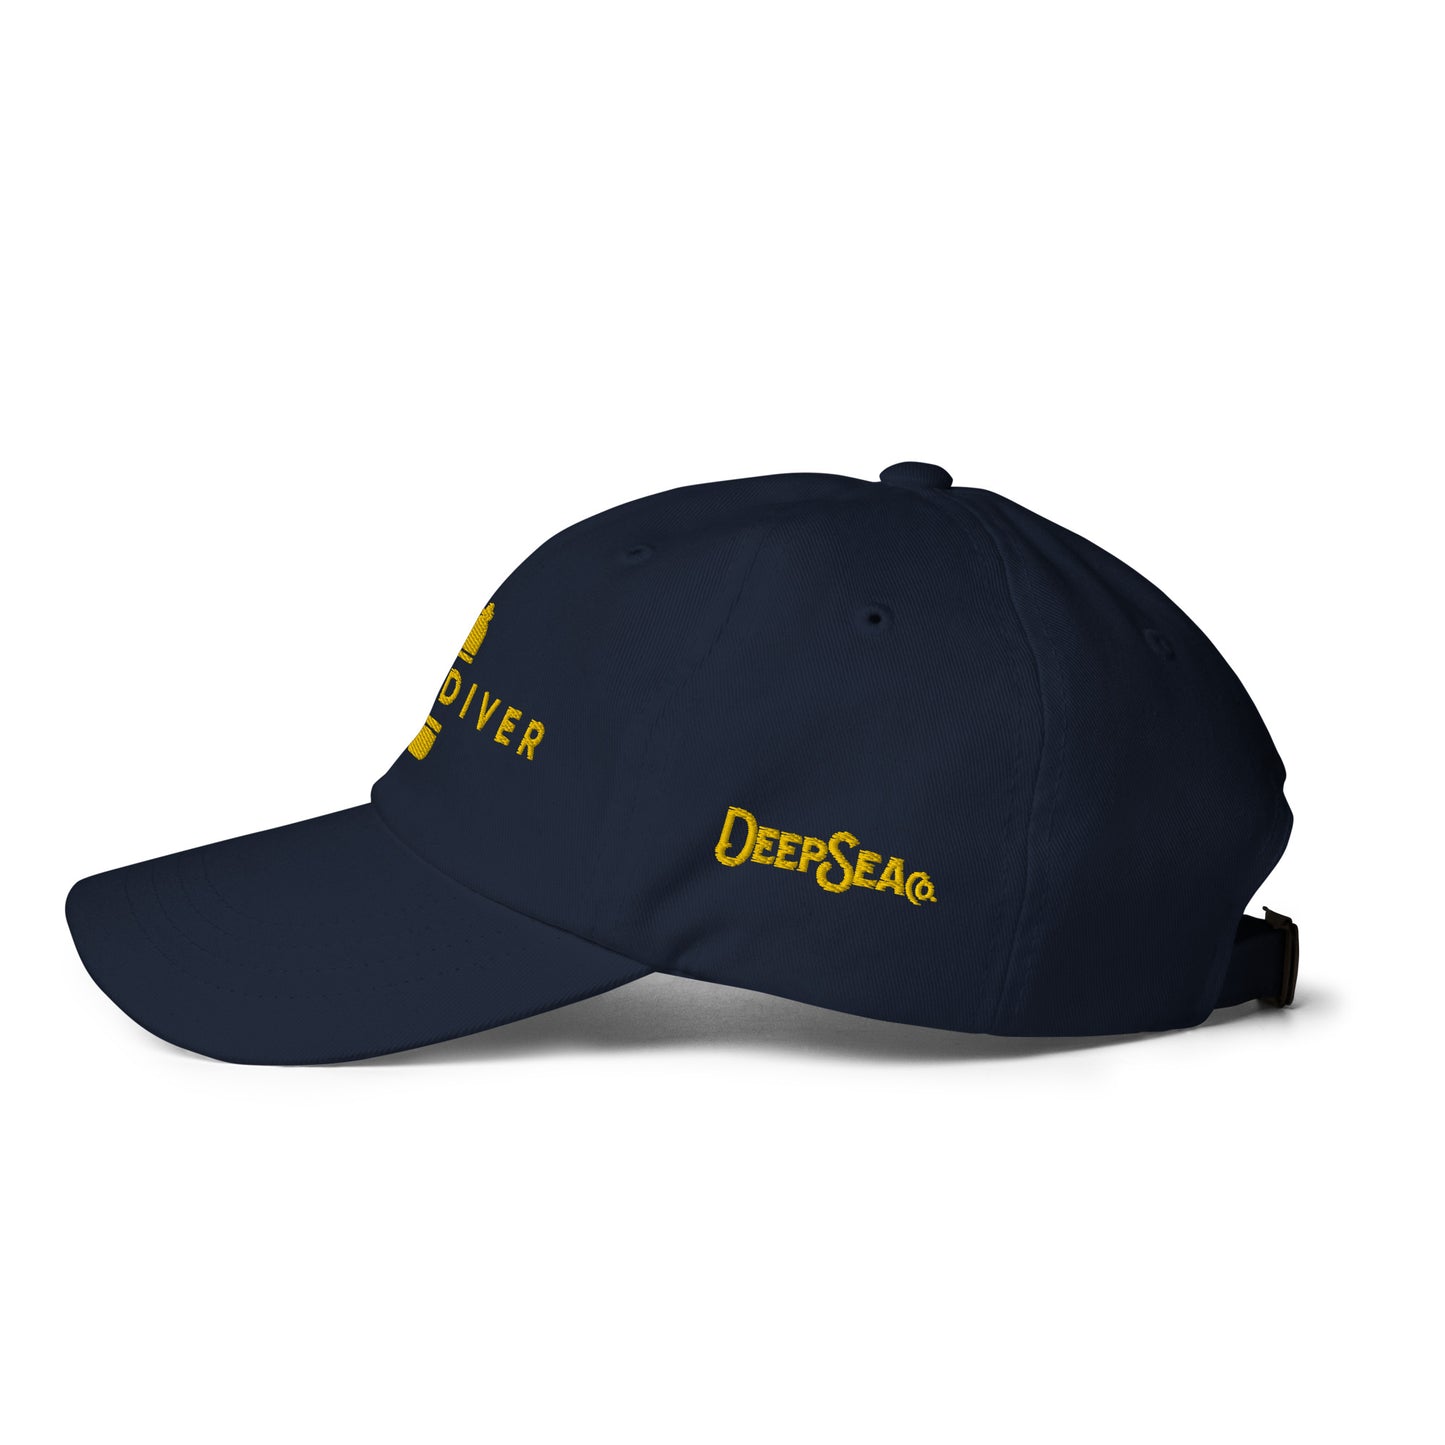 TECH DIVER by DeepSea Dad hat